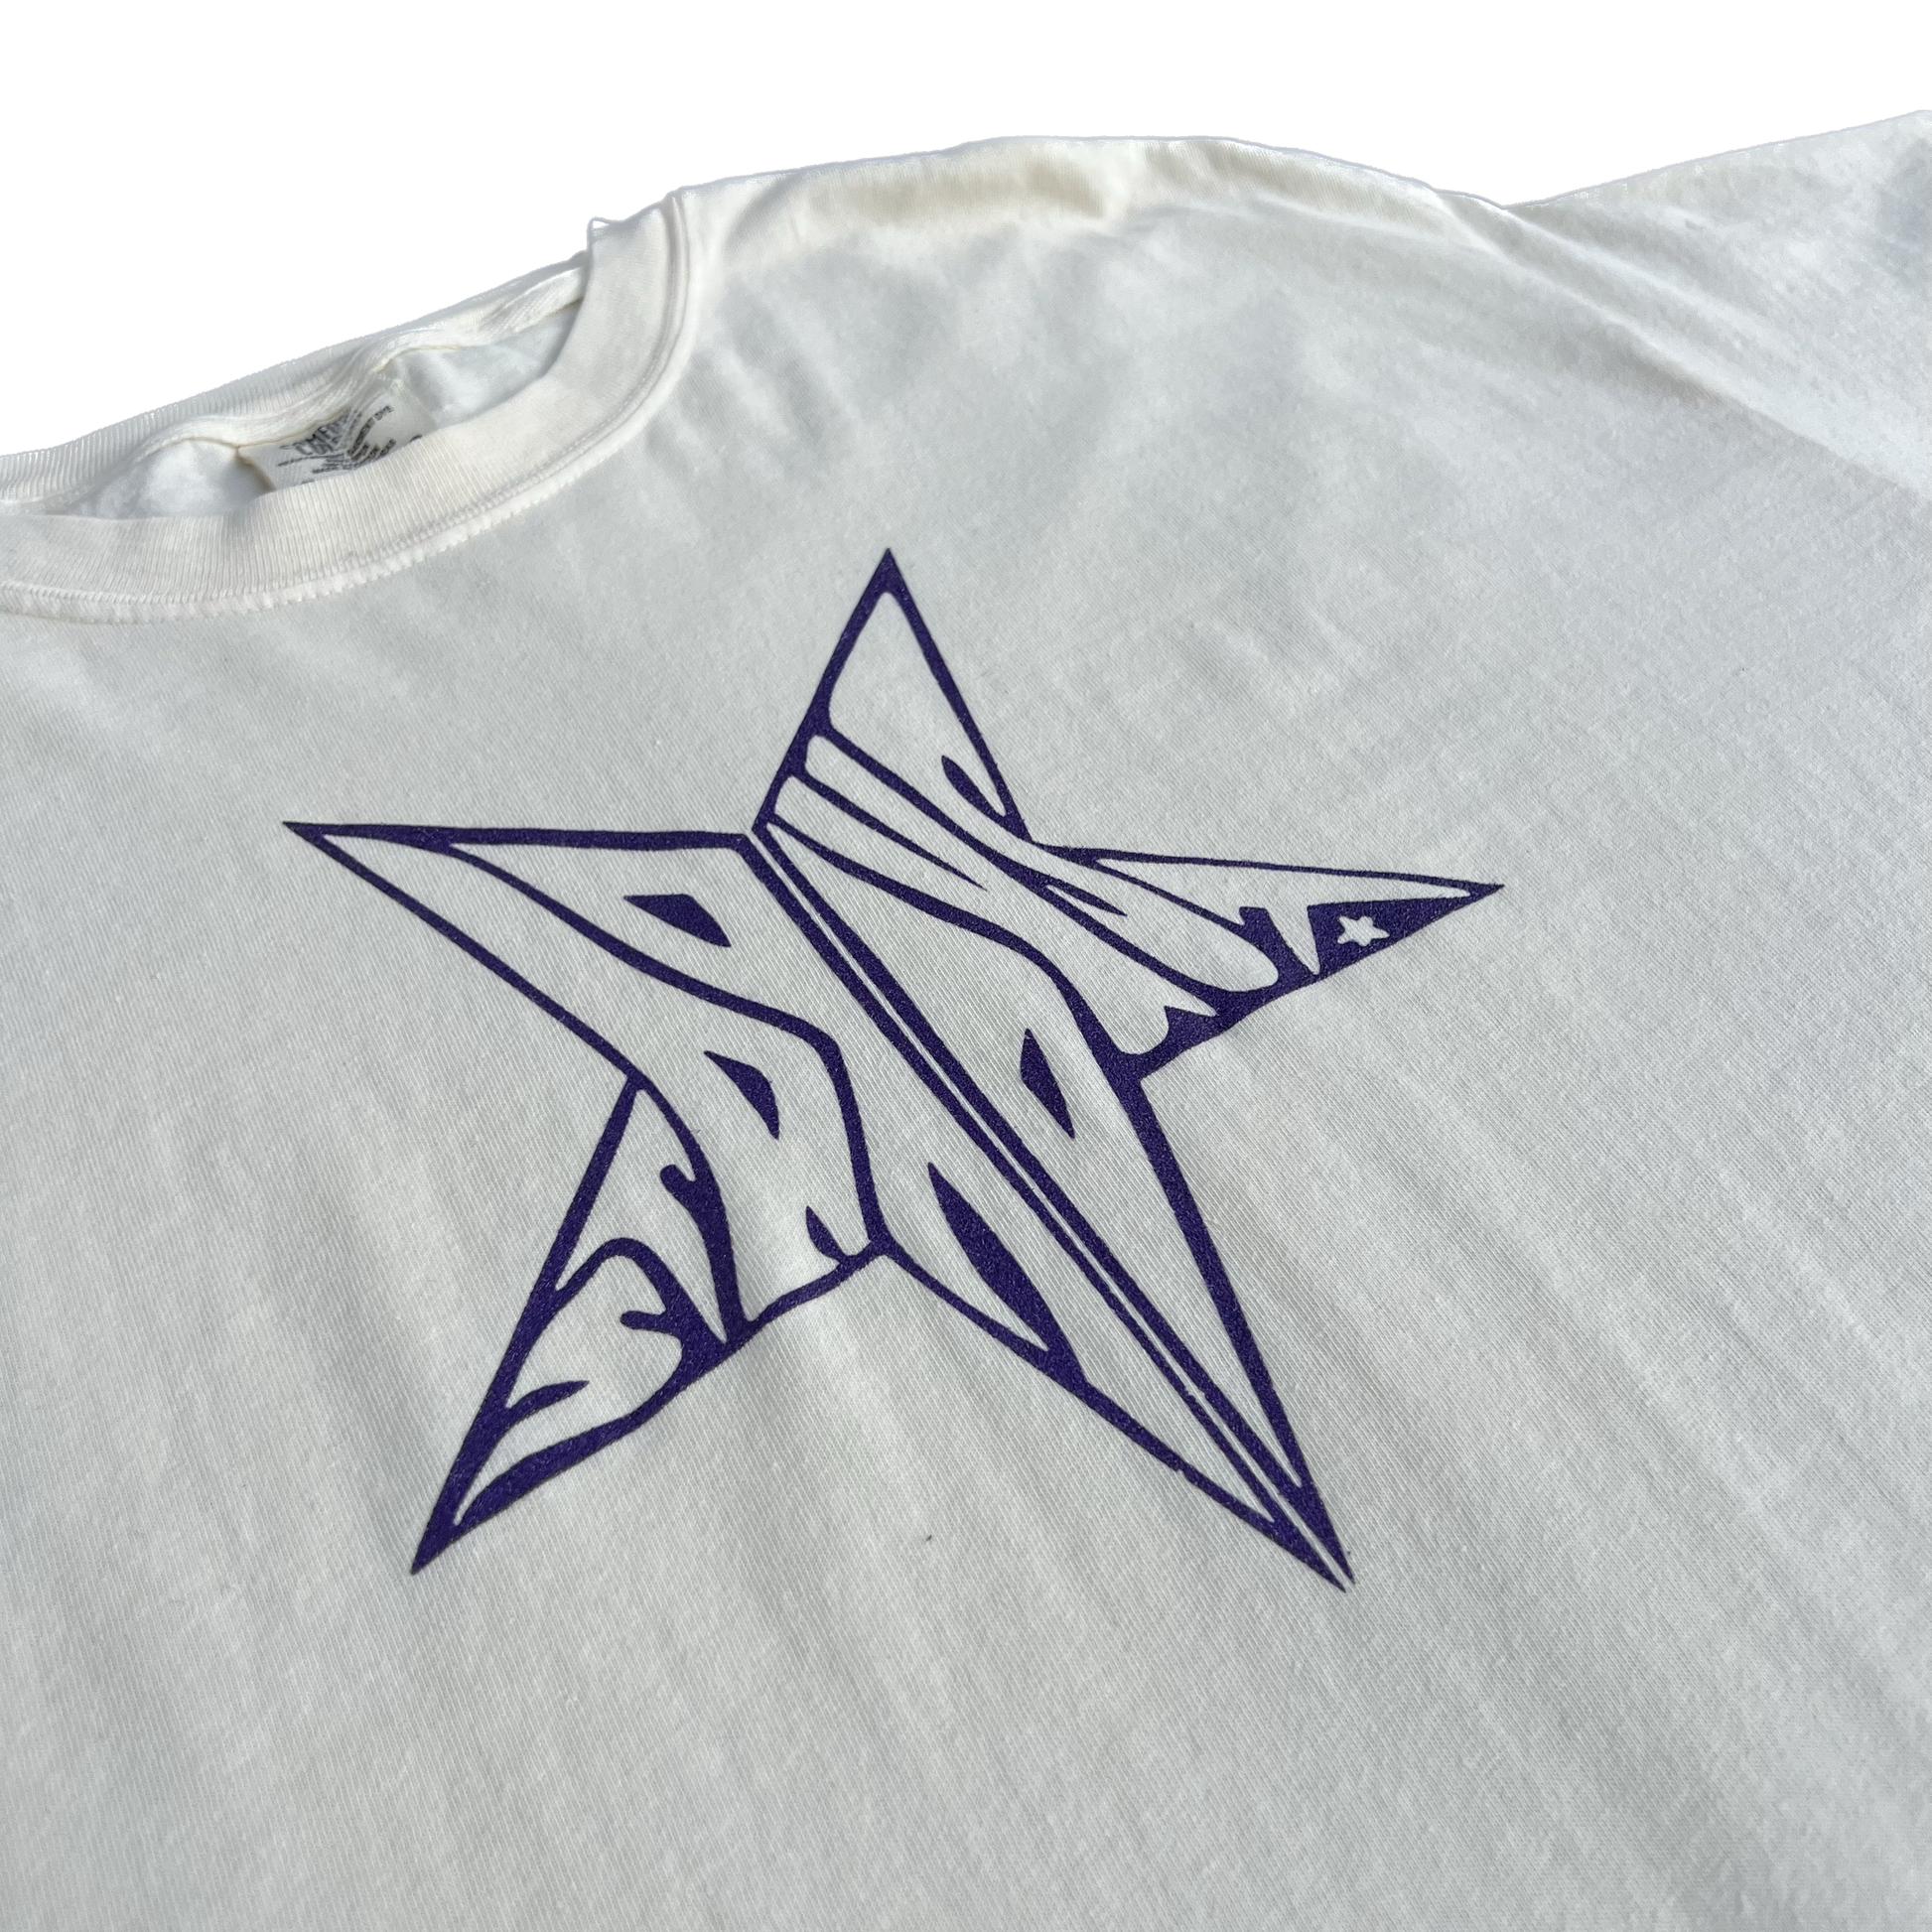 Stardust Skate Shop Purple Shimmer Star Tee 026 - Assorted Colors - 6.1 oz